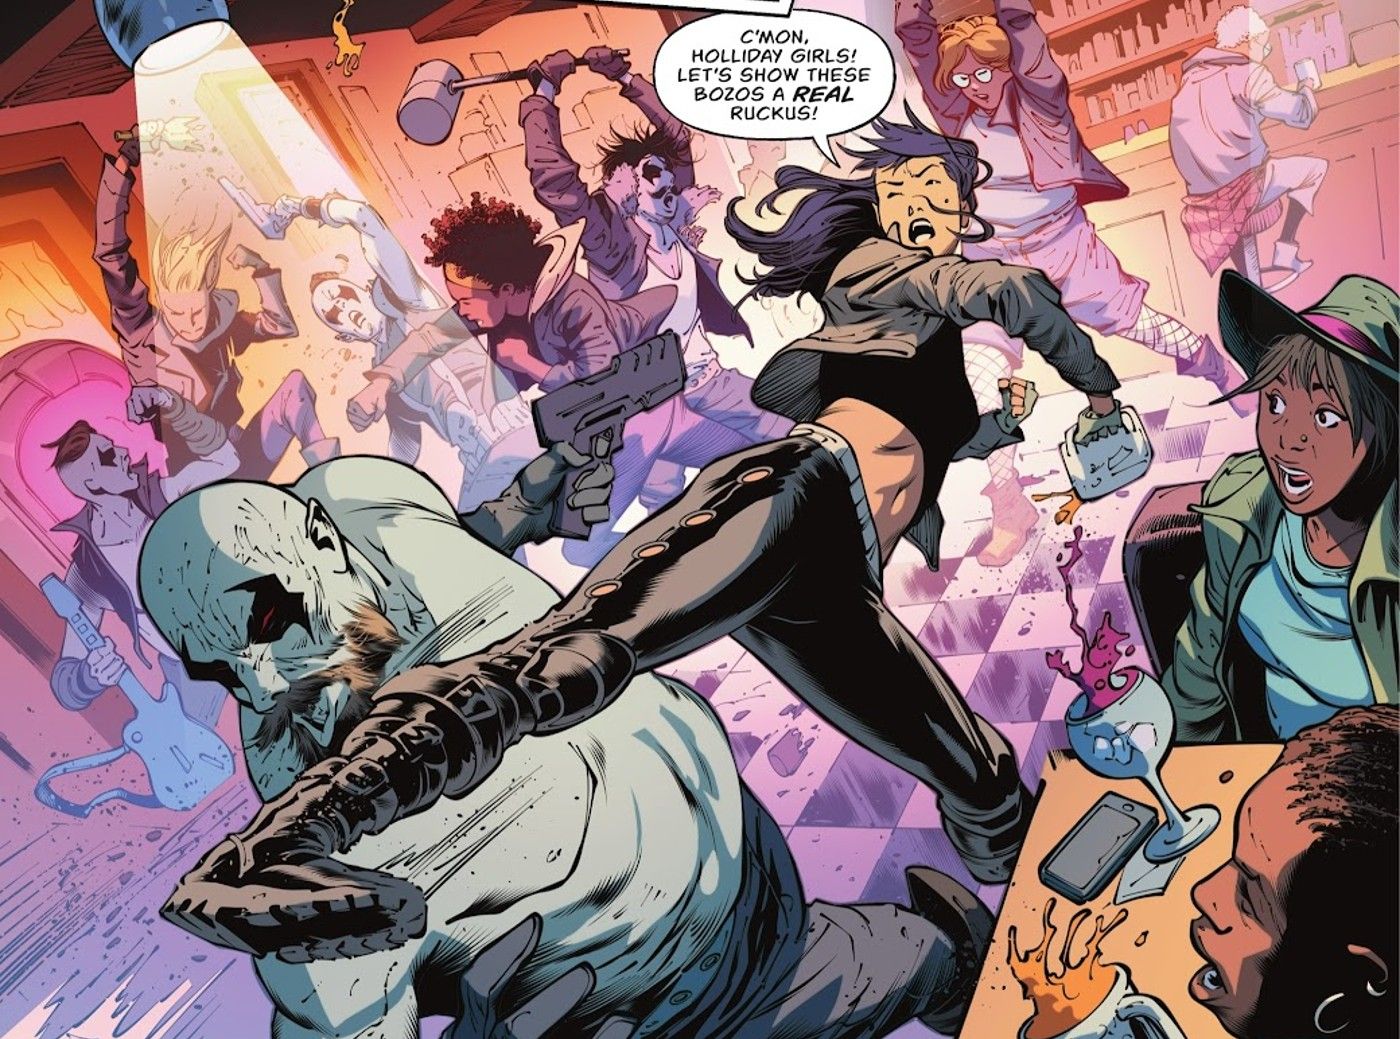 Comic book panel: the Holliday Girls fight Czarnians in a bar.